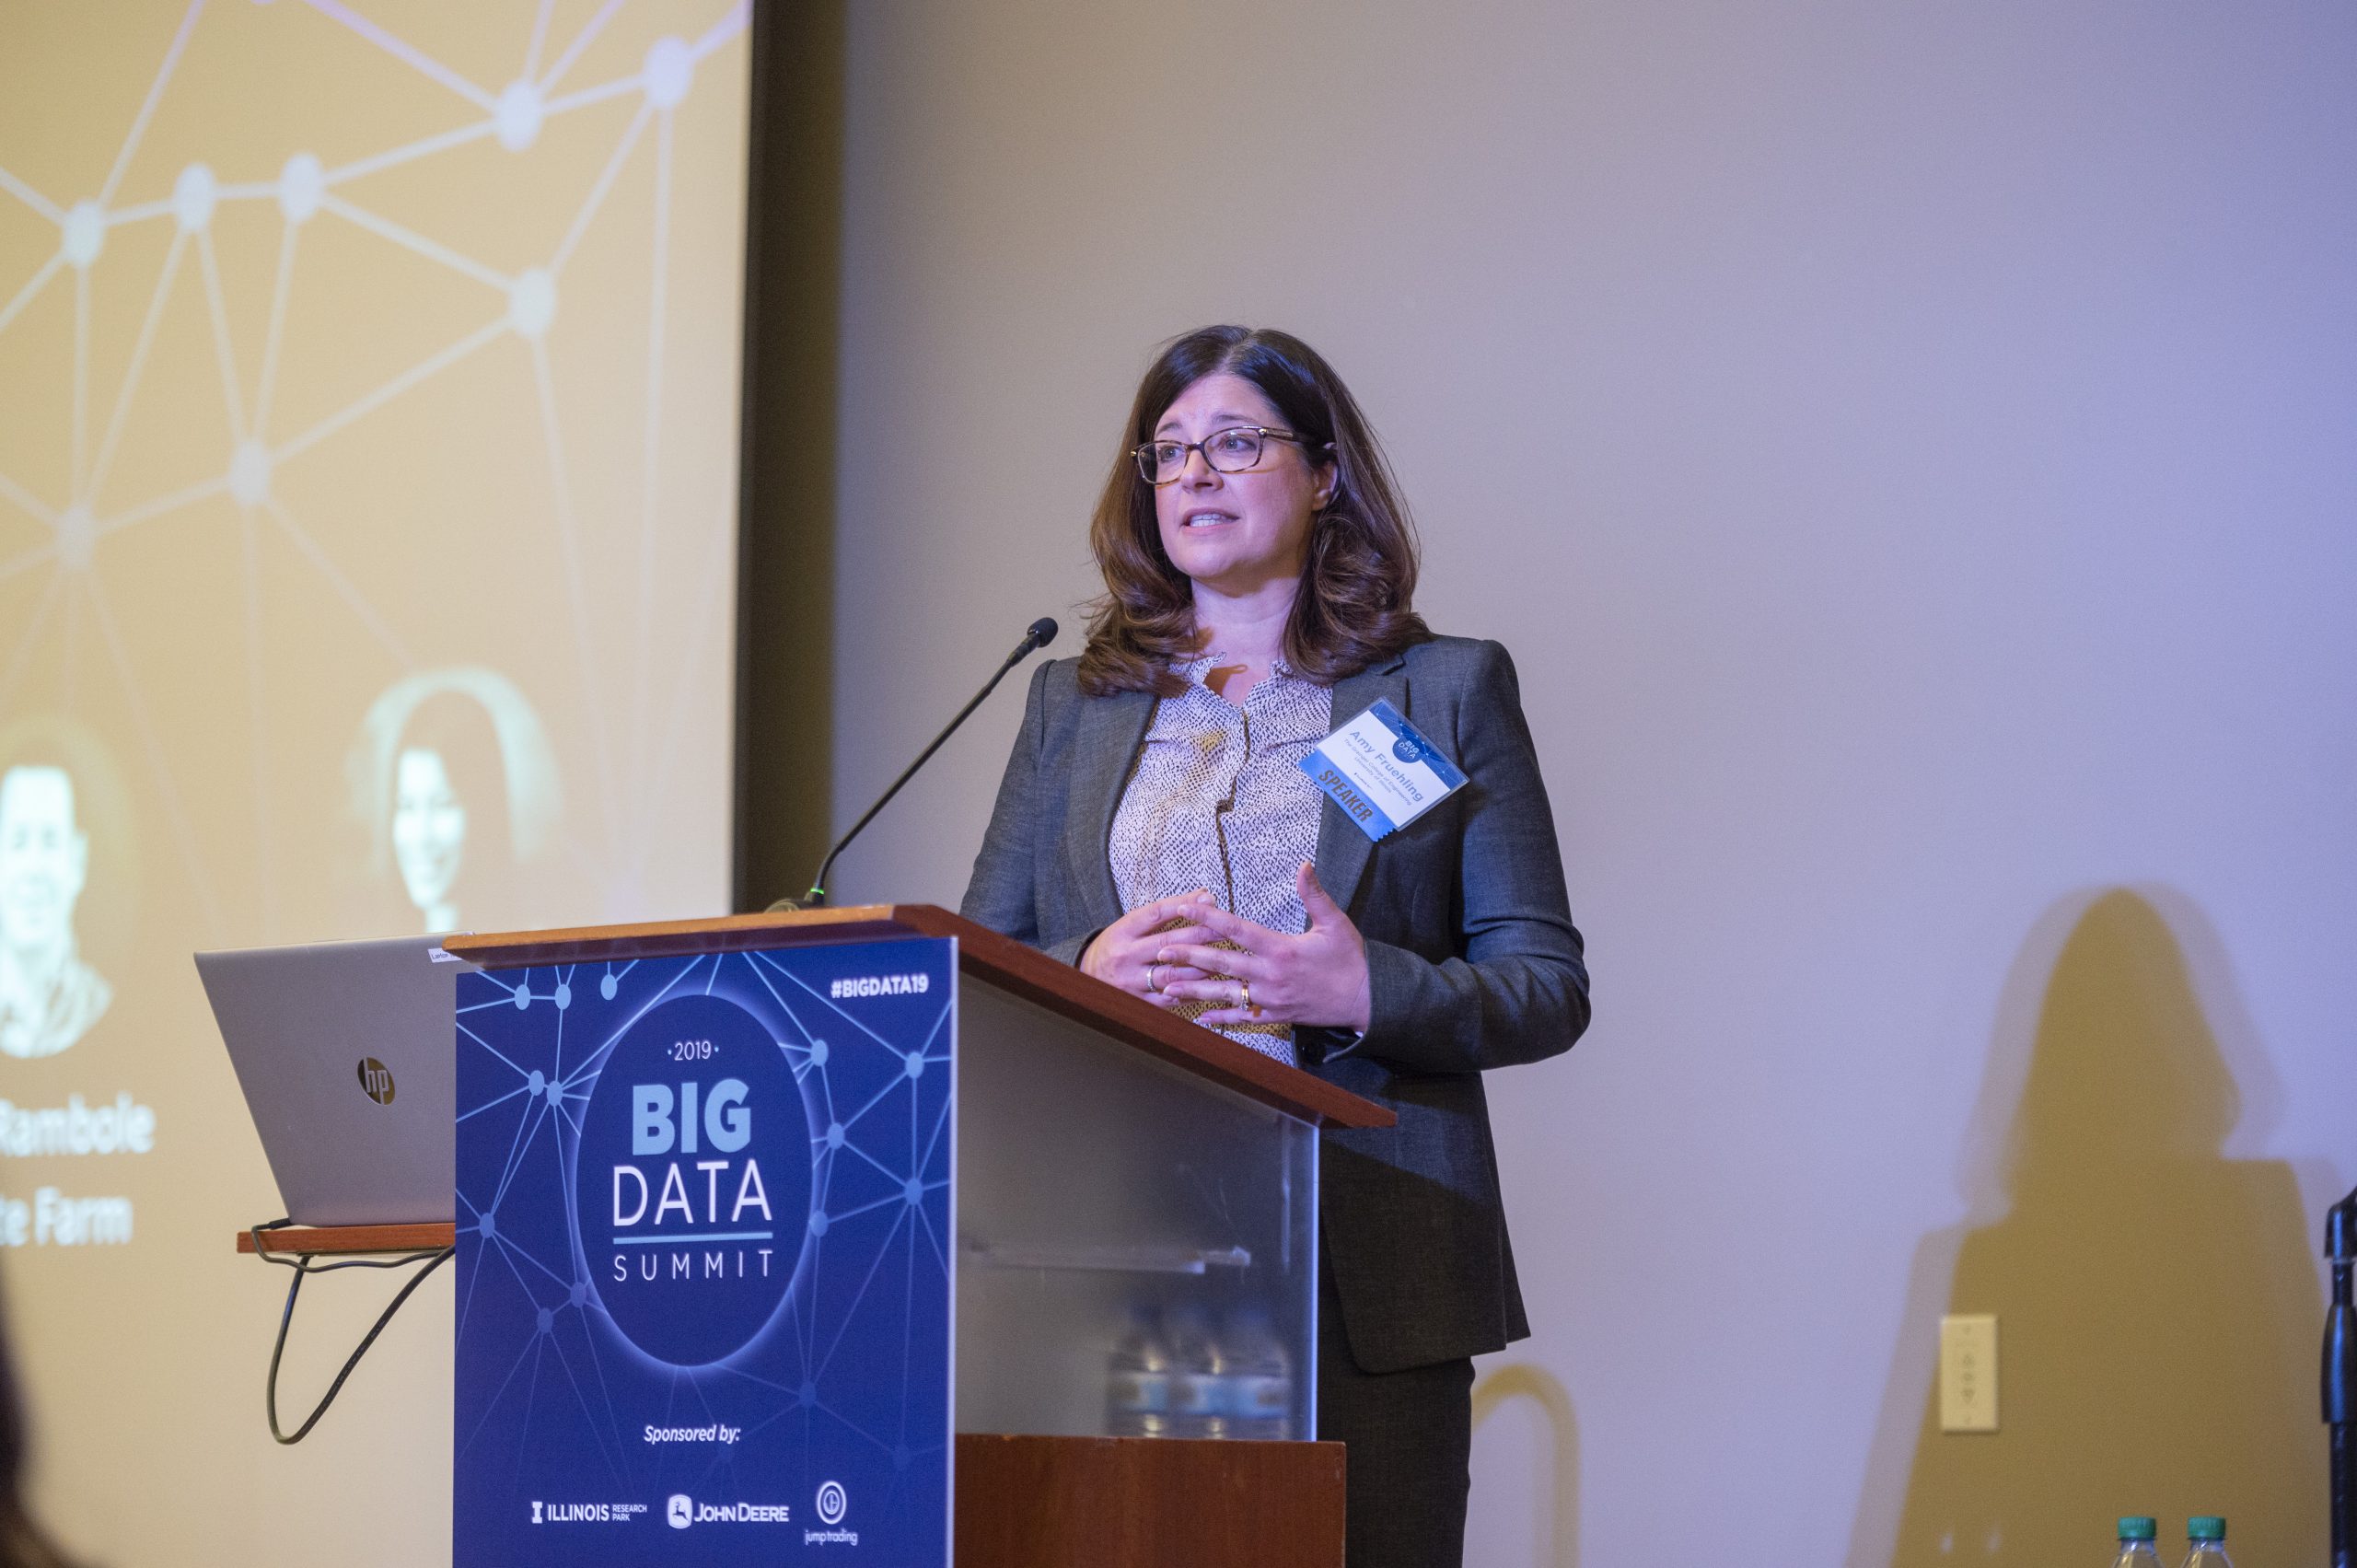 Big Data Summit 2019